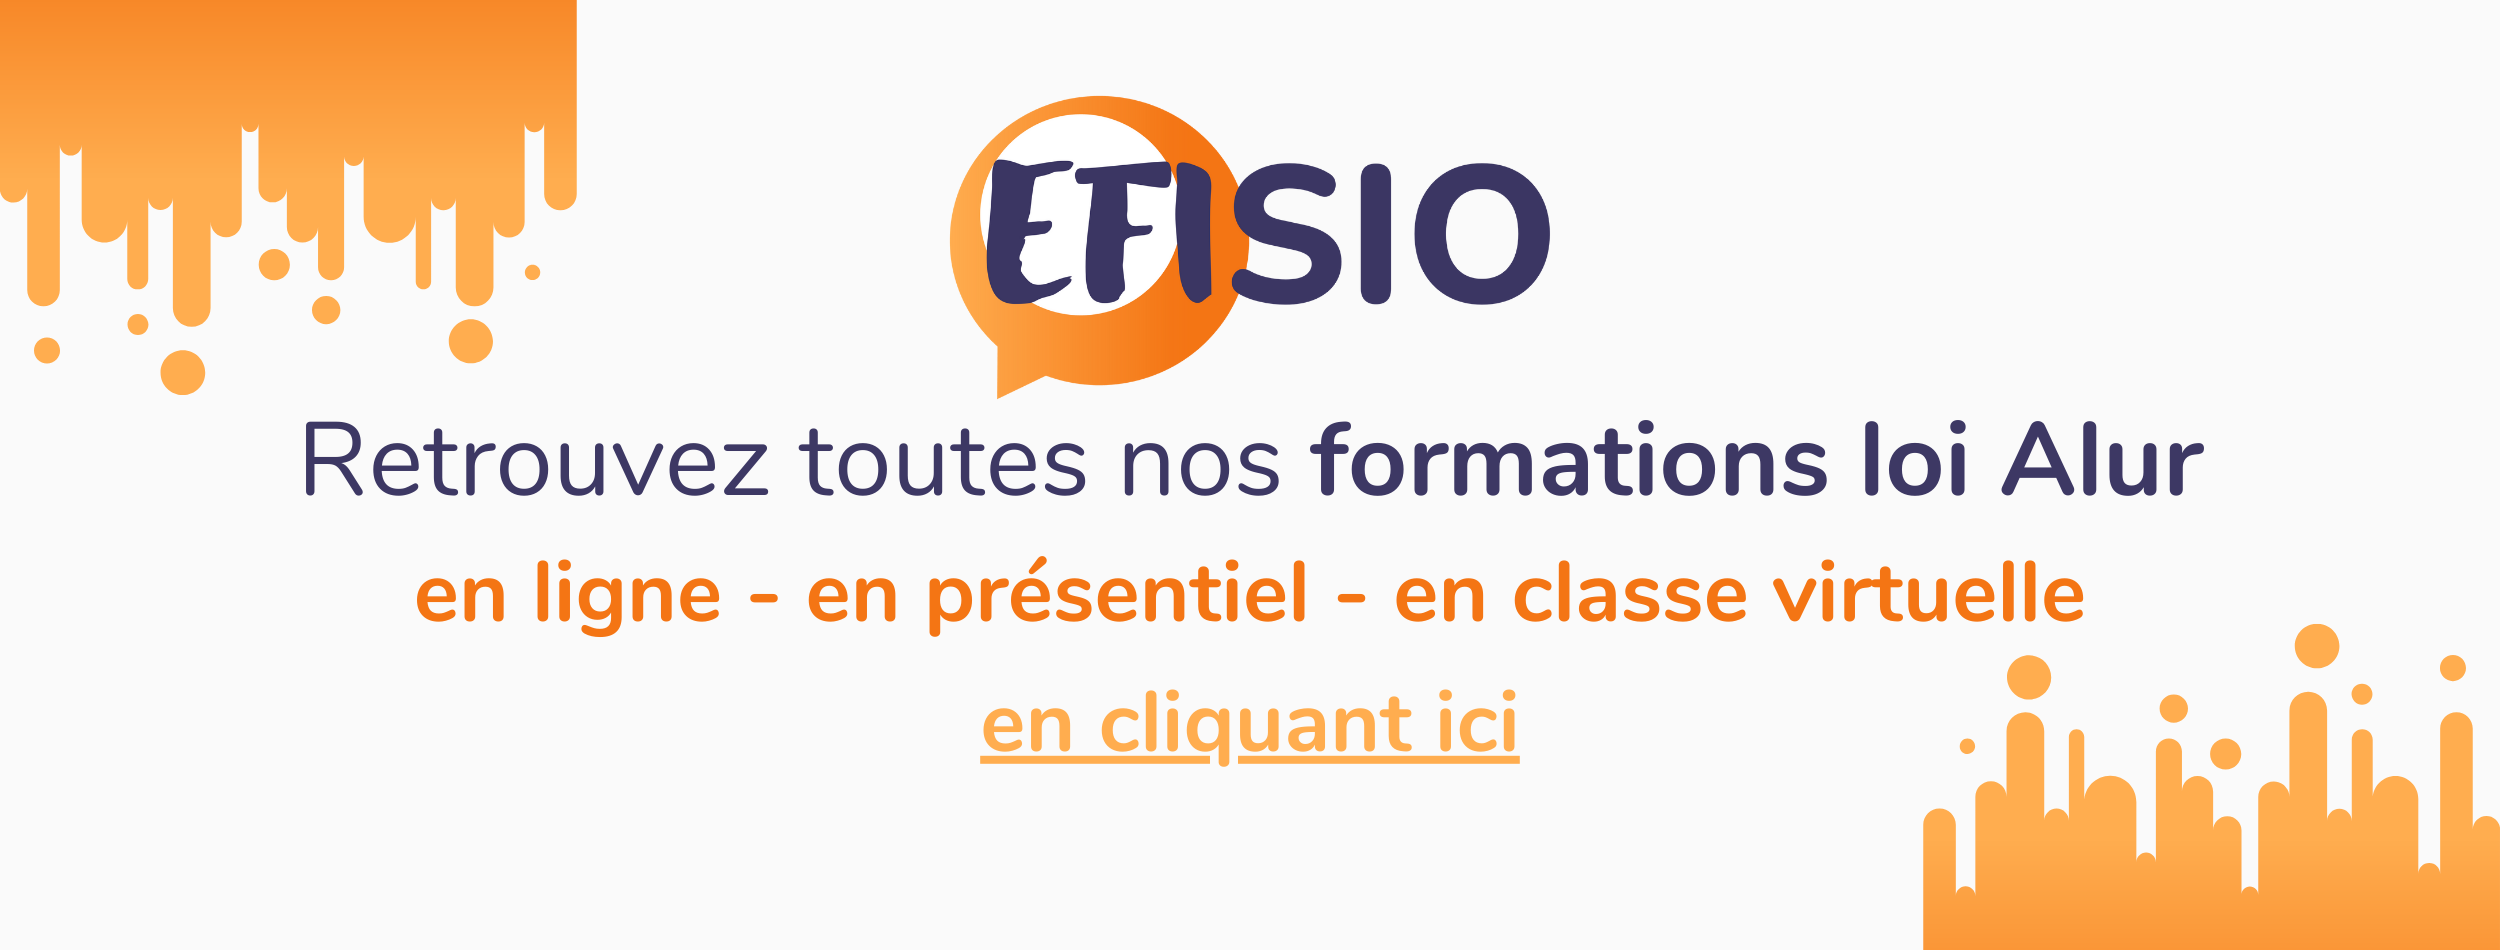 Formation loi Alur Efisio - Blog Bannière 1